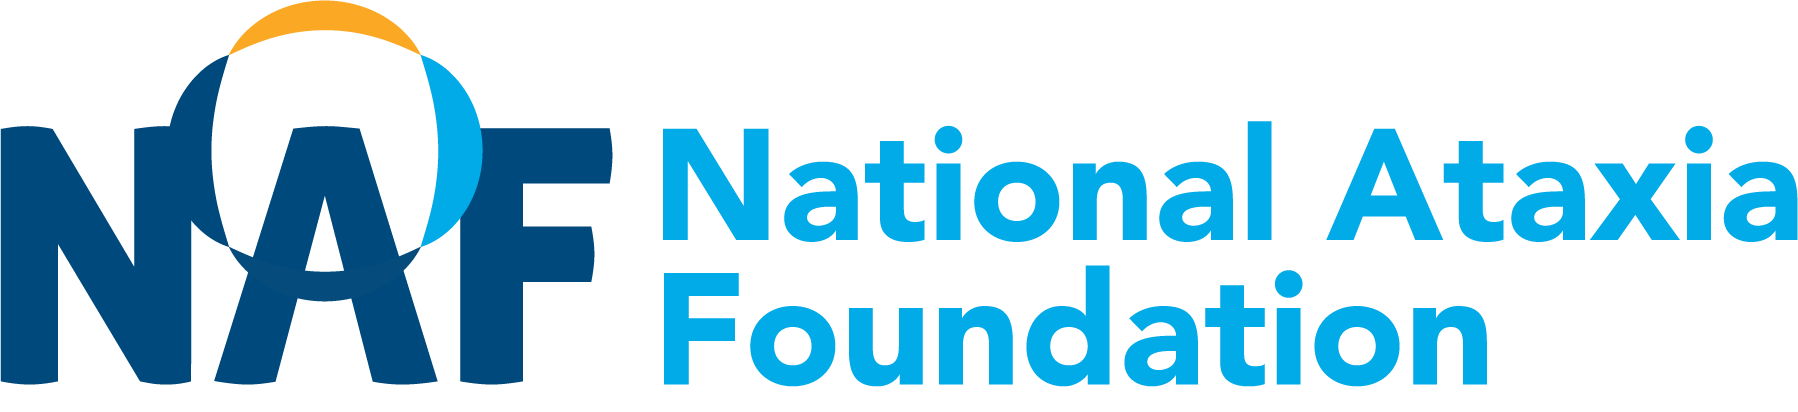 National Ataxia Foundation